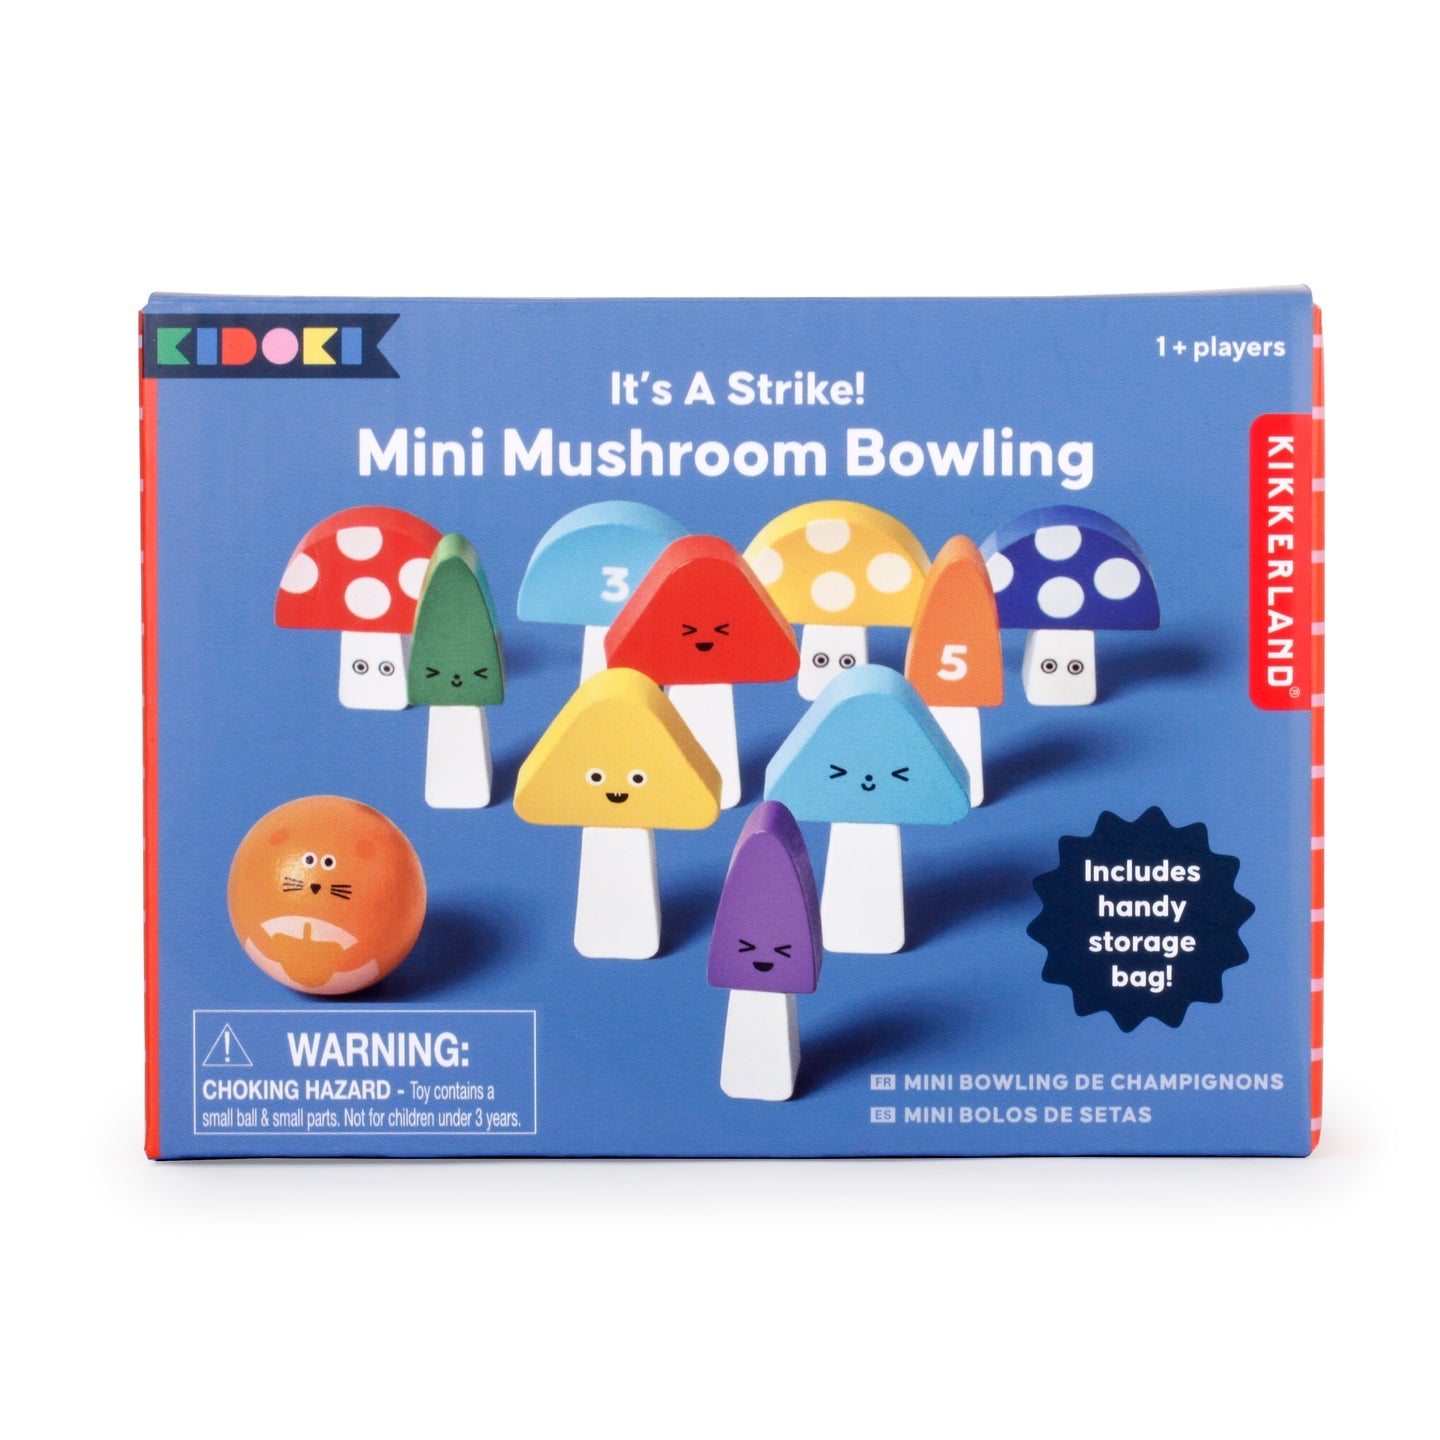 It's A Strike! Mushroom Bowling set